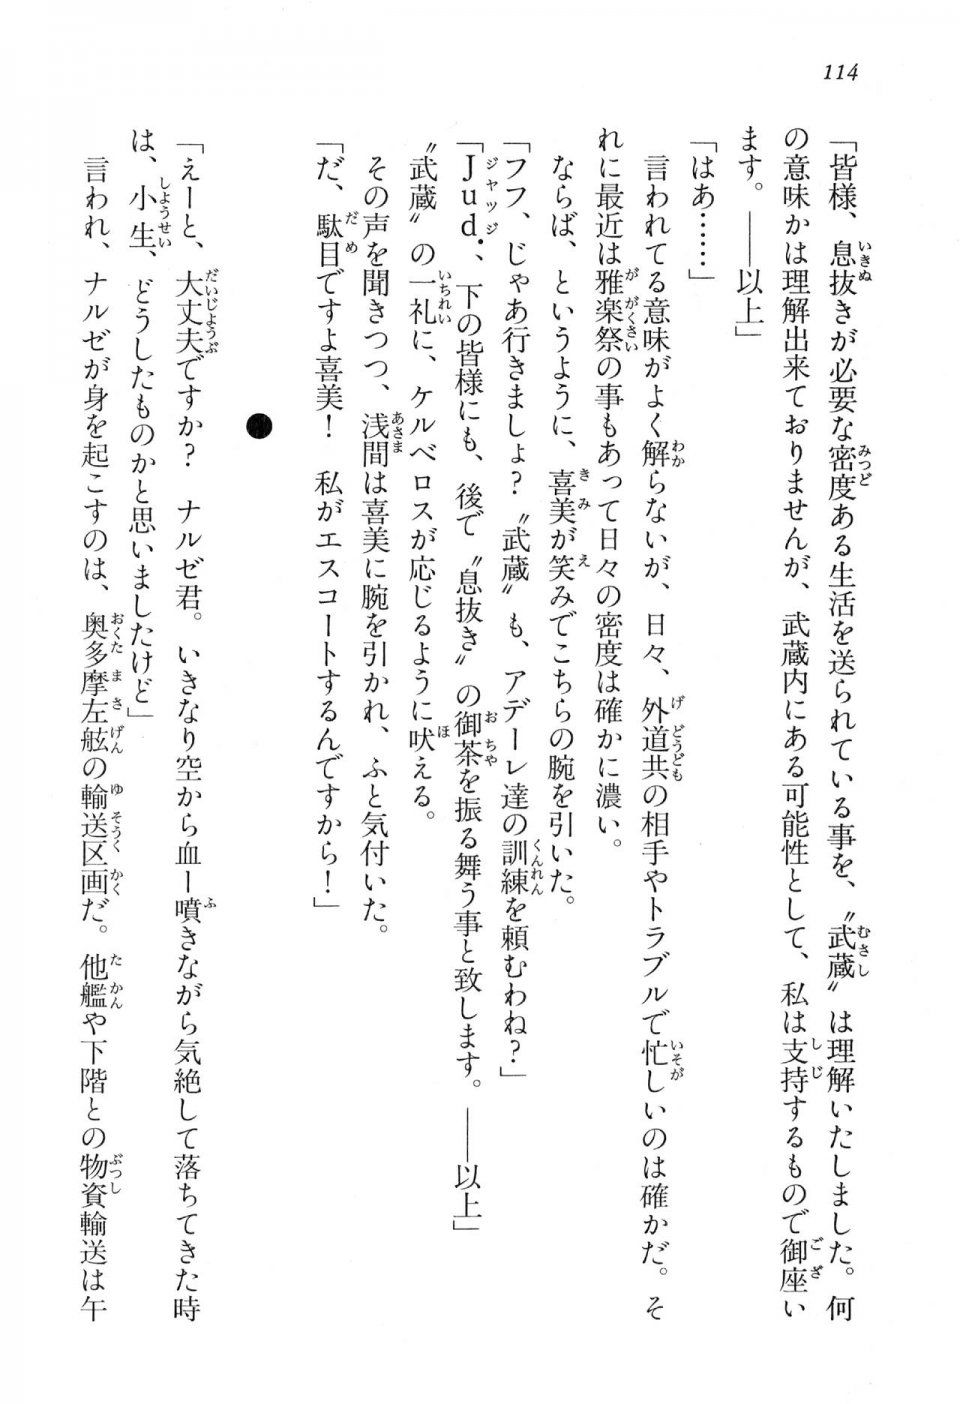 Kyoukai Senjou no Horizon BD Special Mininovel Vol 2(1B) - Photo #118